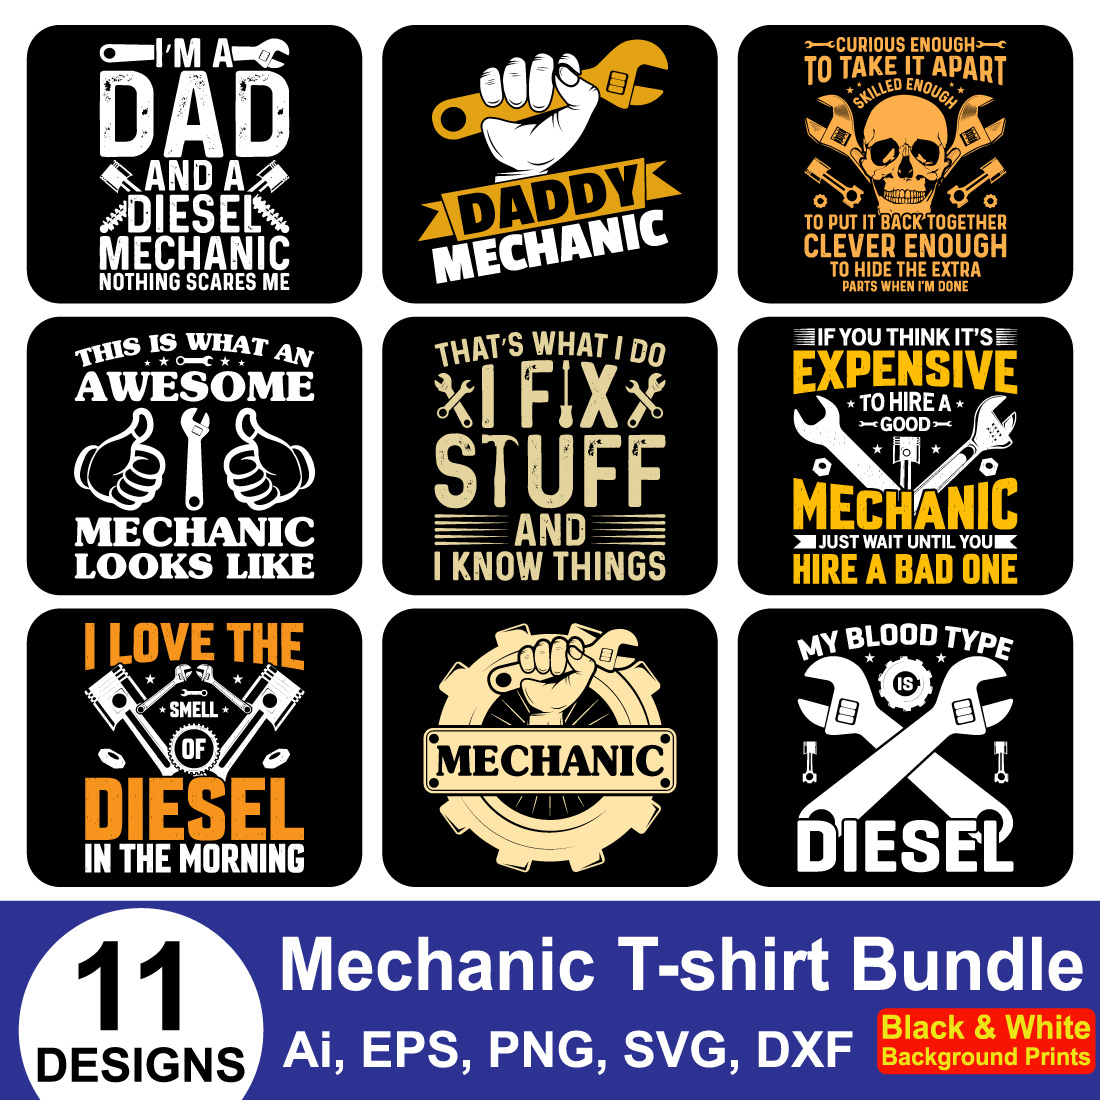 Mechanic Engineering T-shirt Design image cover.